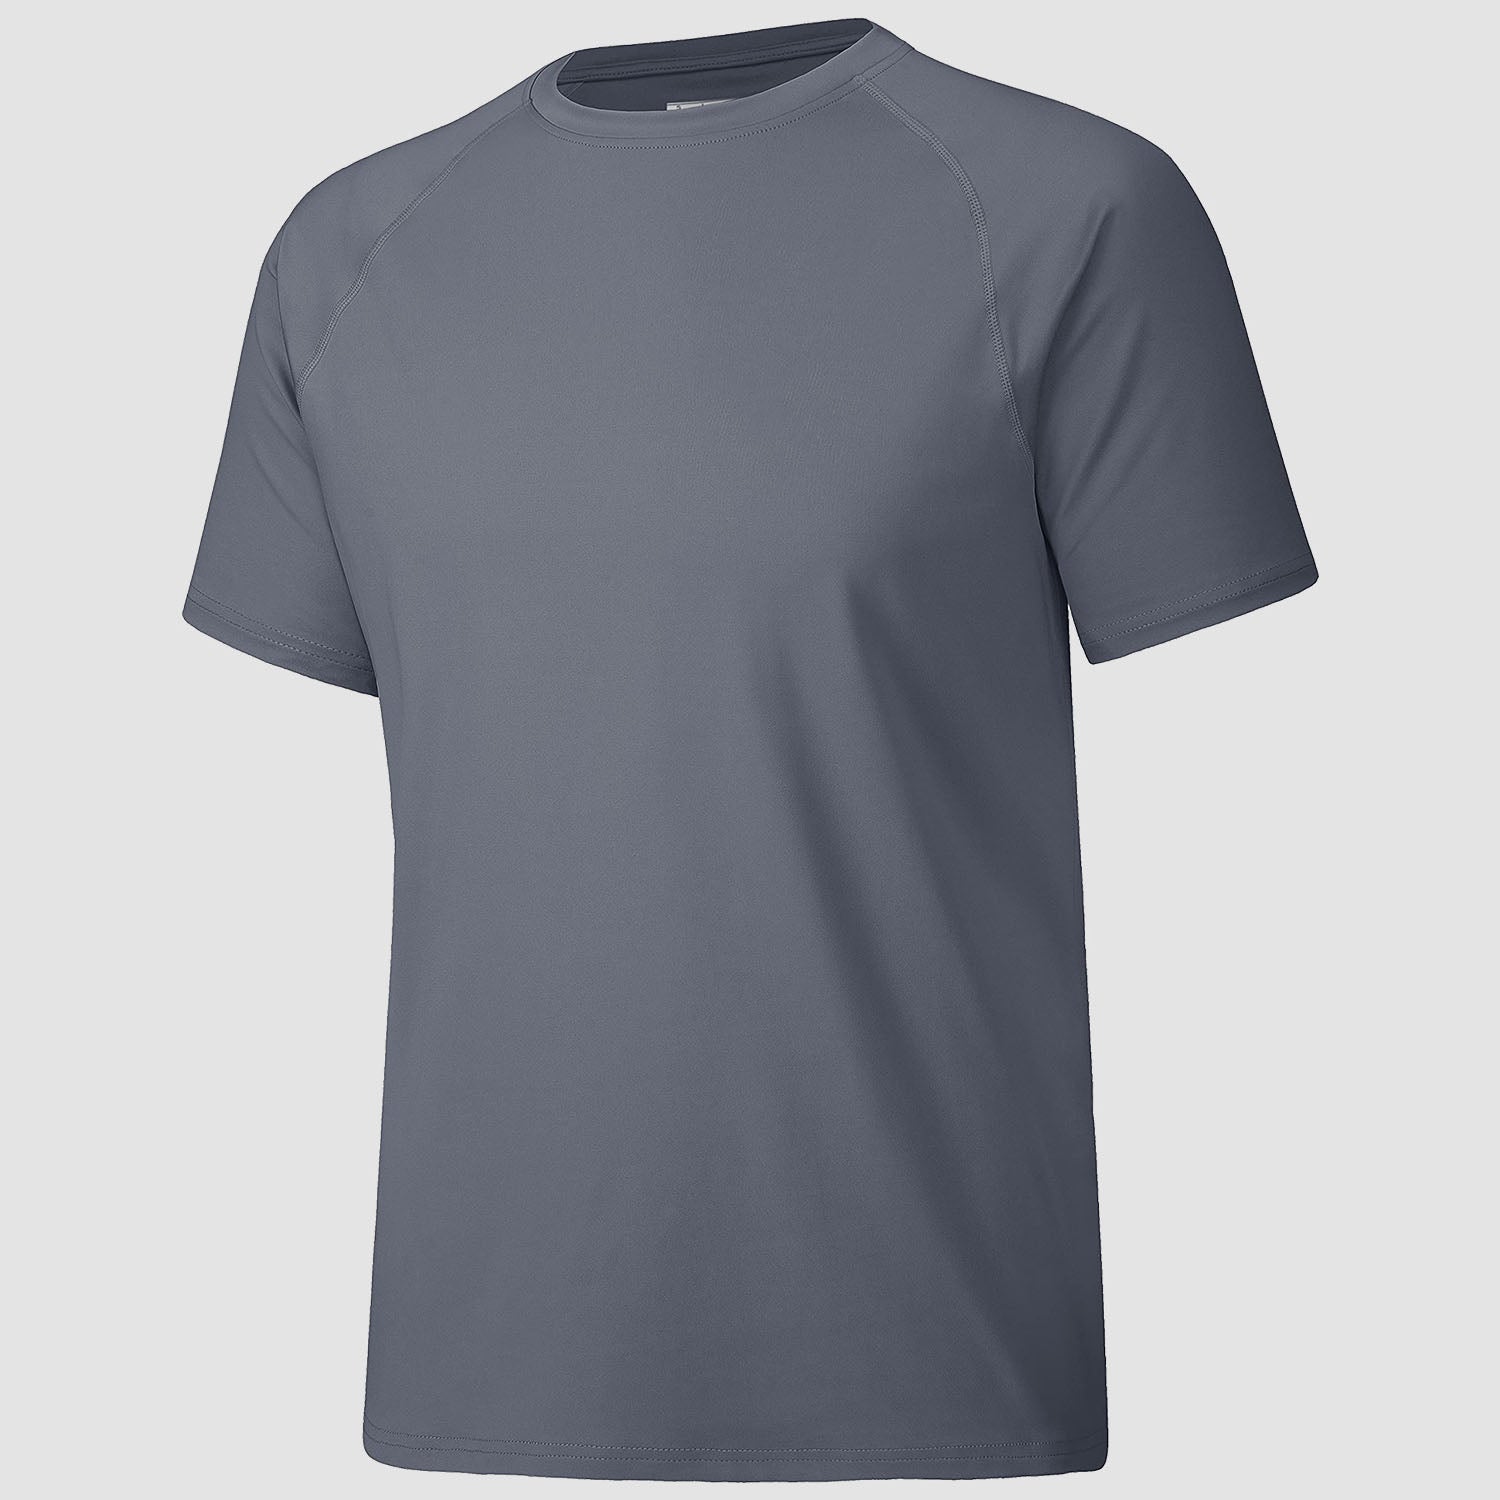 【Buy 4 Get the 4th Free！】Men's T-shirt UPF 80+ Sun Protection Quick Dry Rashguard Workout Fishing Running AthleticT-Shirts